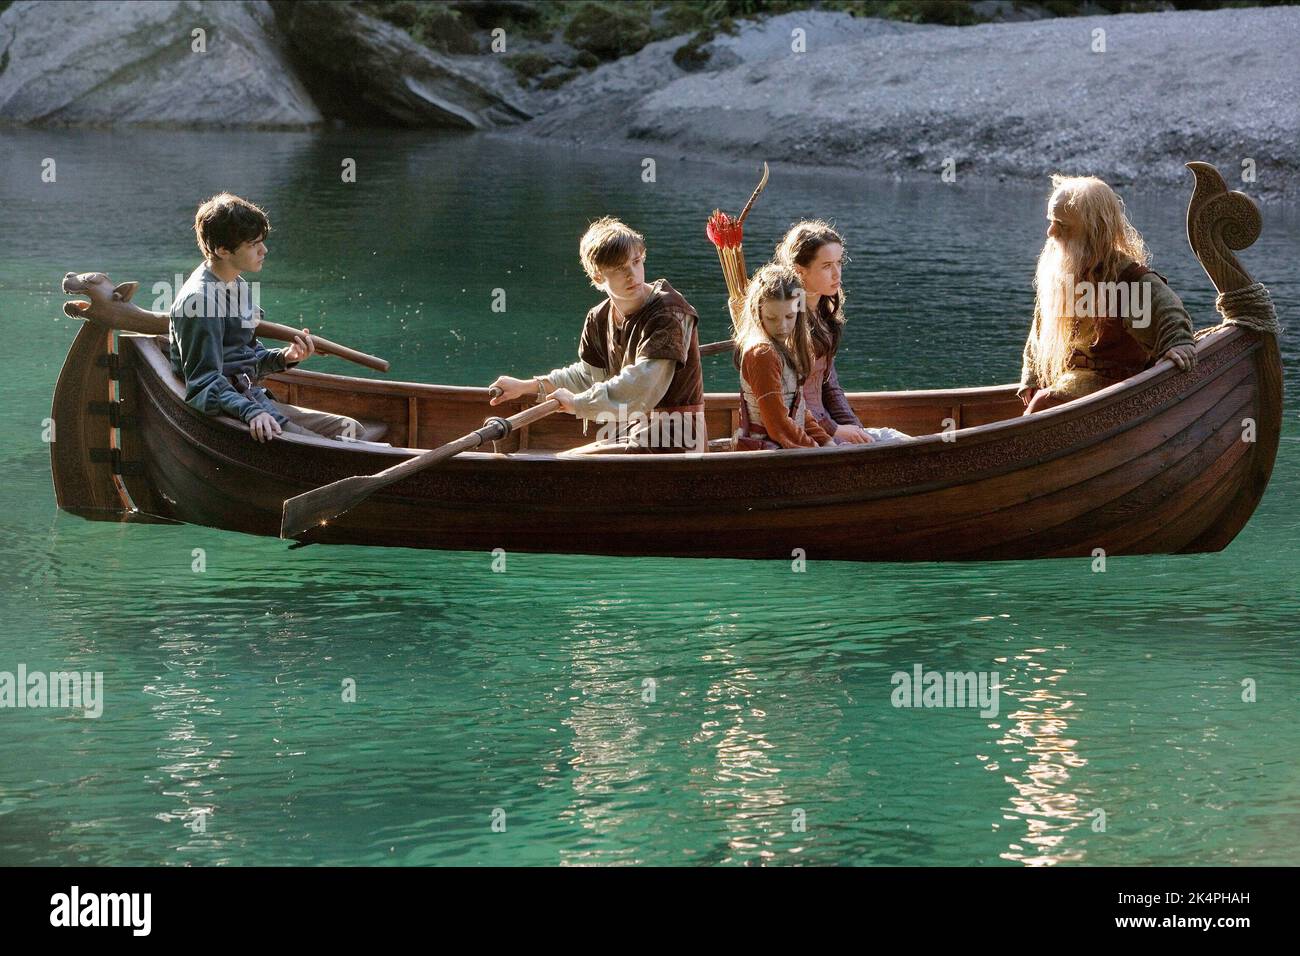 SKANDAR KEYNES, William Moseley GEORGIE HENLEY ANNA POPPLEWELL, Peter Dinklage, Le cronache di Narnia: Il principe Caspian, 2008 Foto Stock